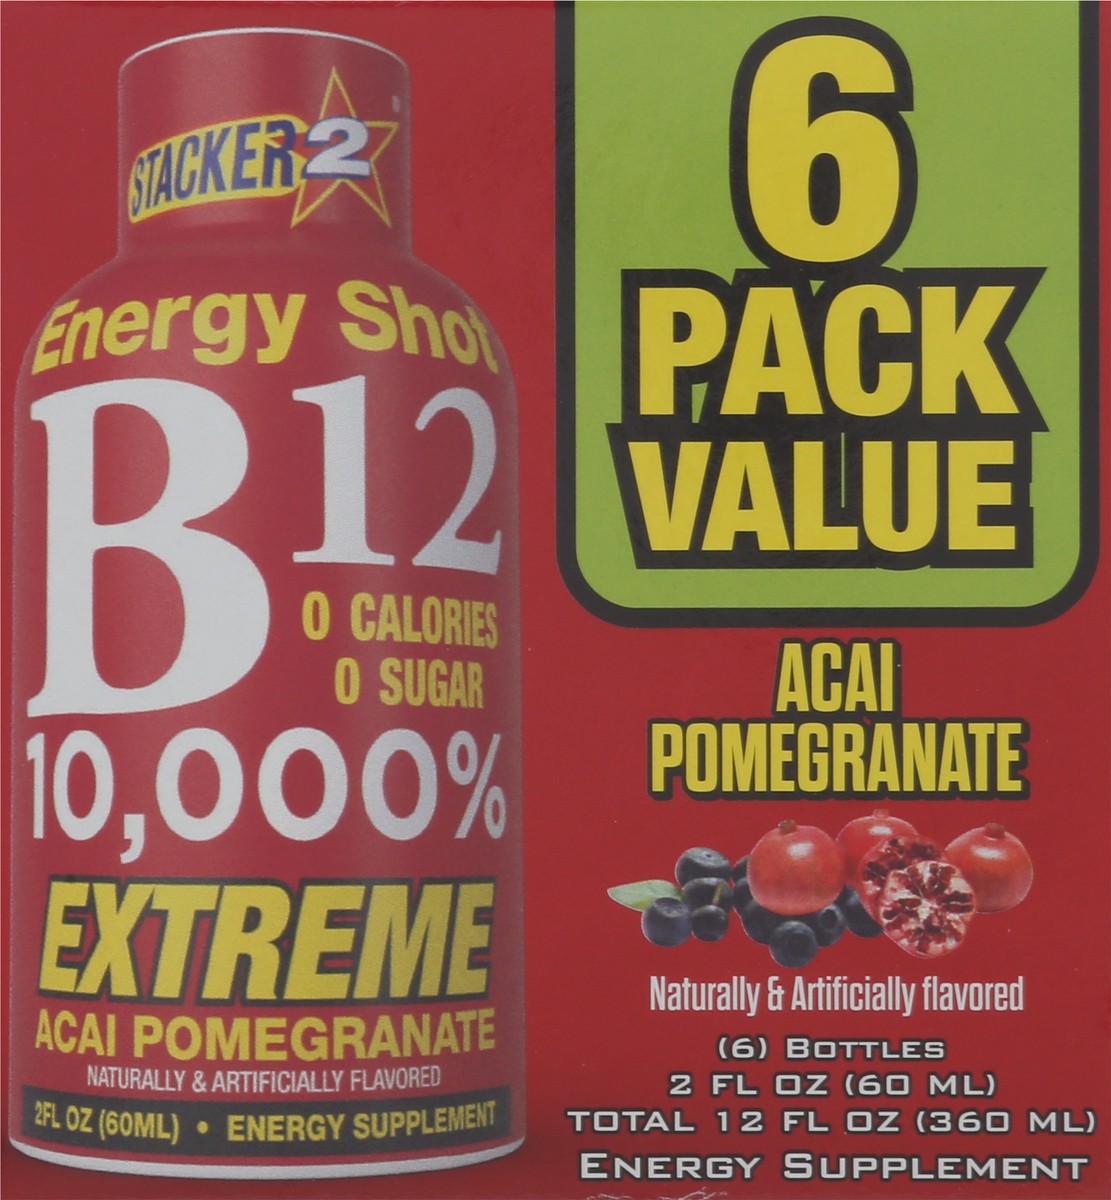 slide 3 of 13, Stacker 2 B12 10,000% Energy Shots Acai Pomegranate flavor - 6 ct, 6 ct